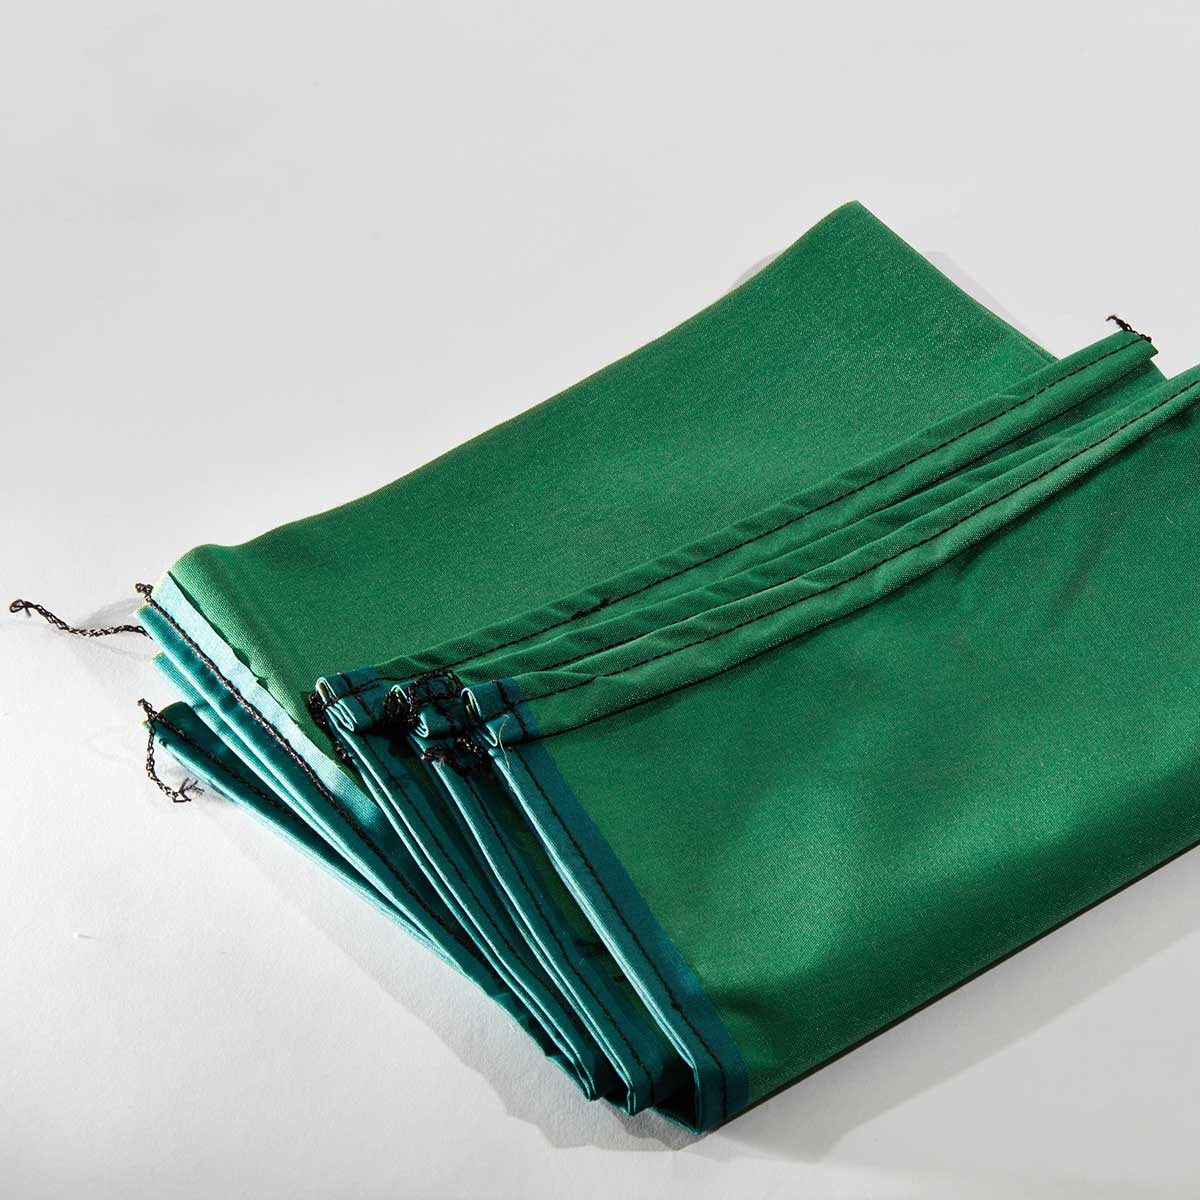 Armor Cordura Fabric Sandbag - Green